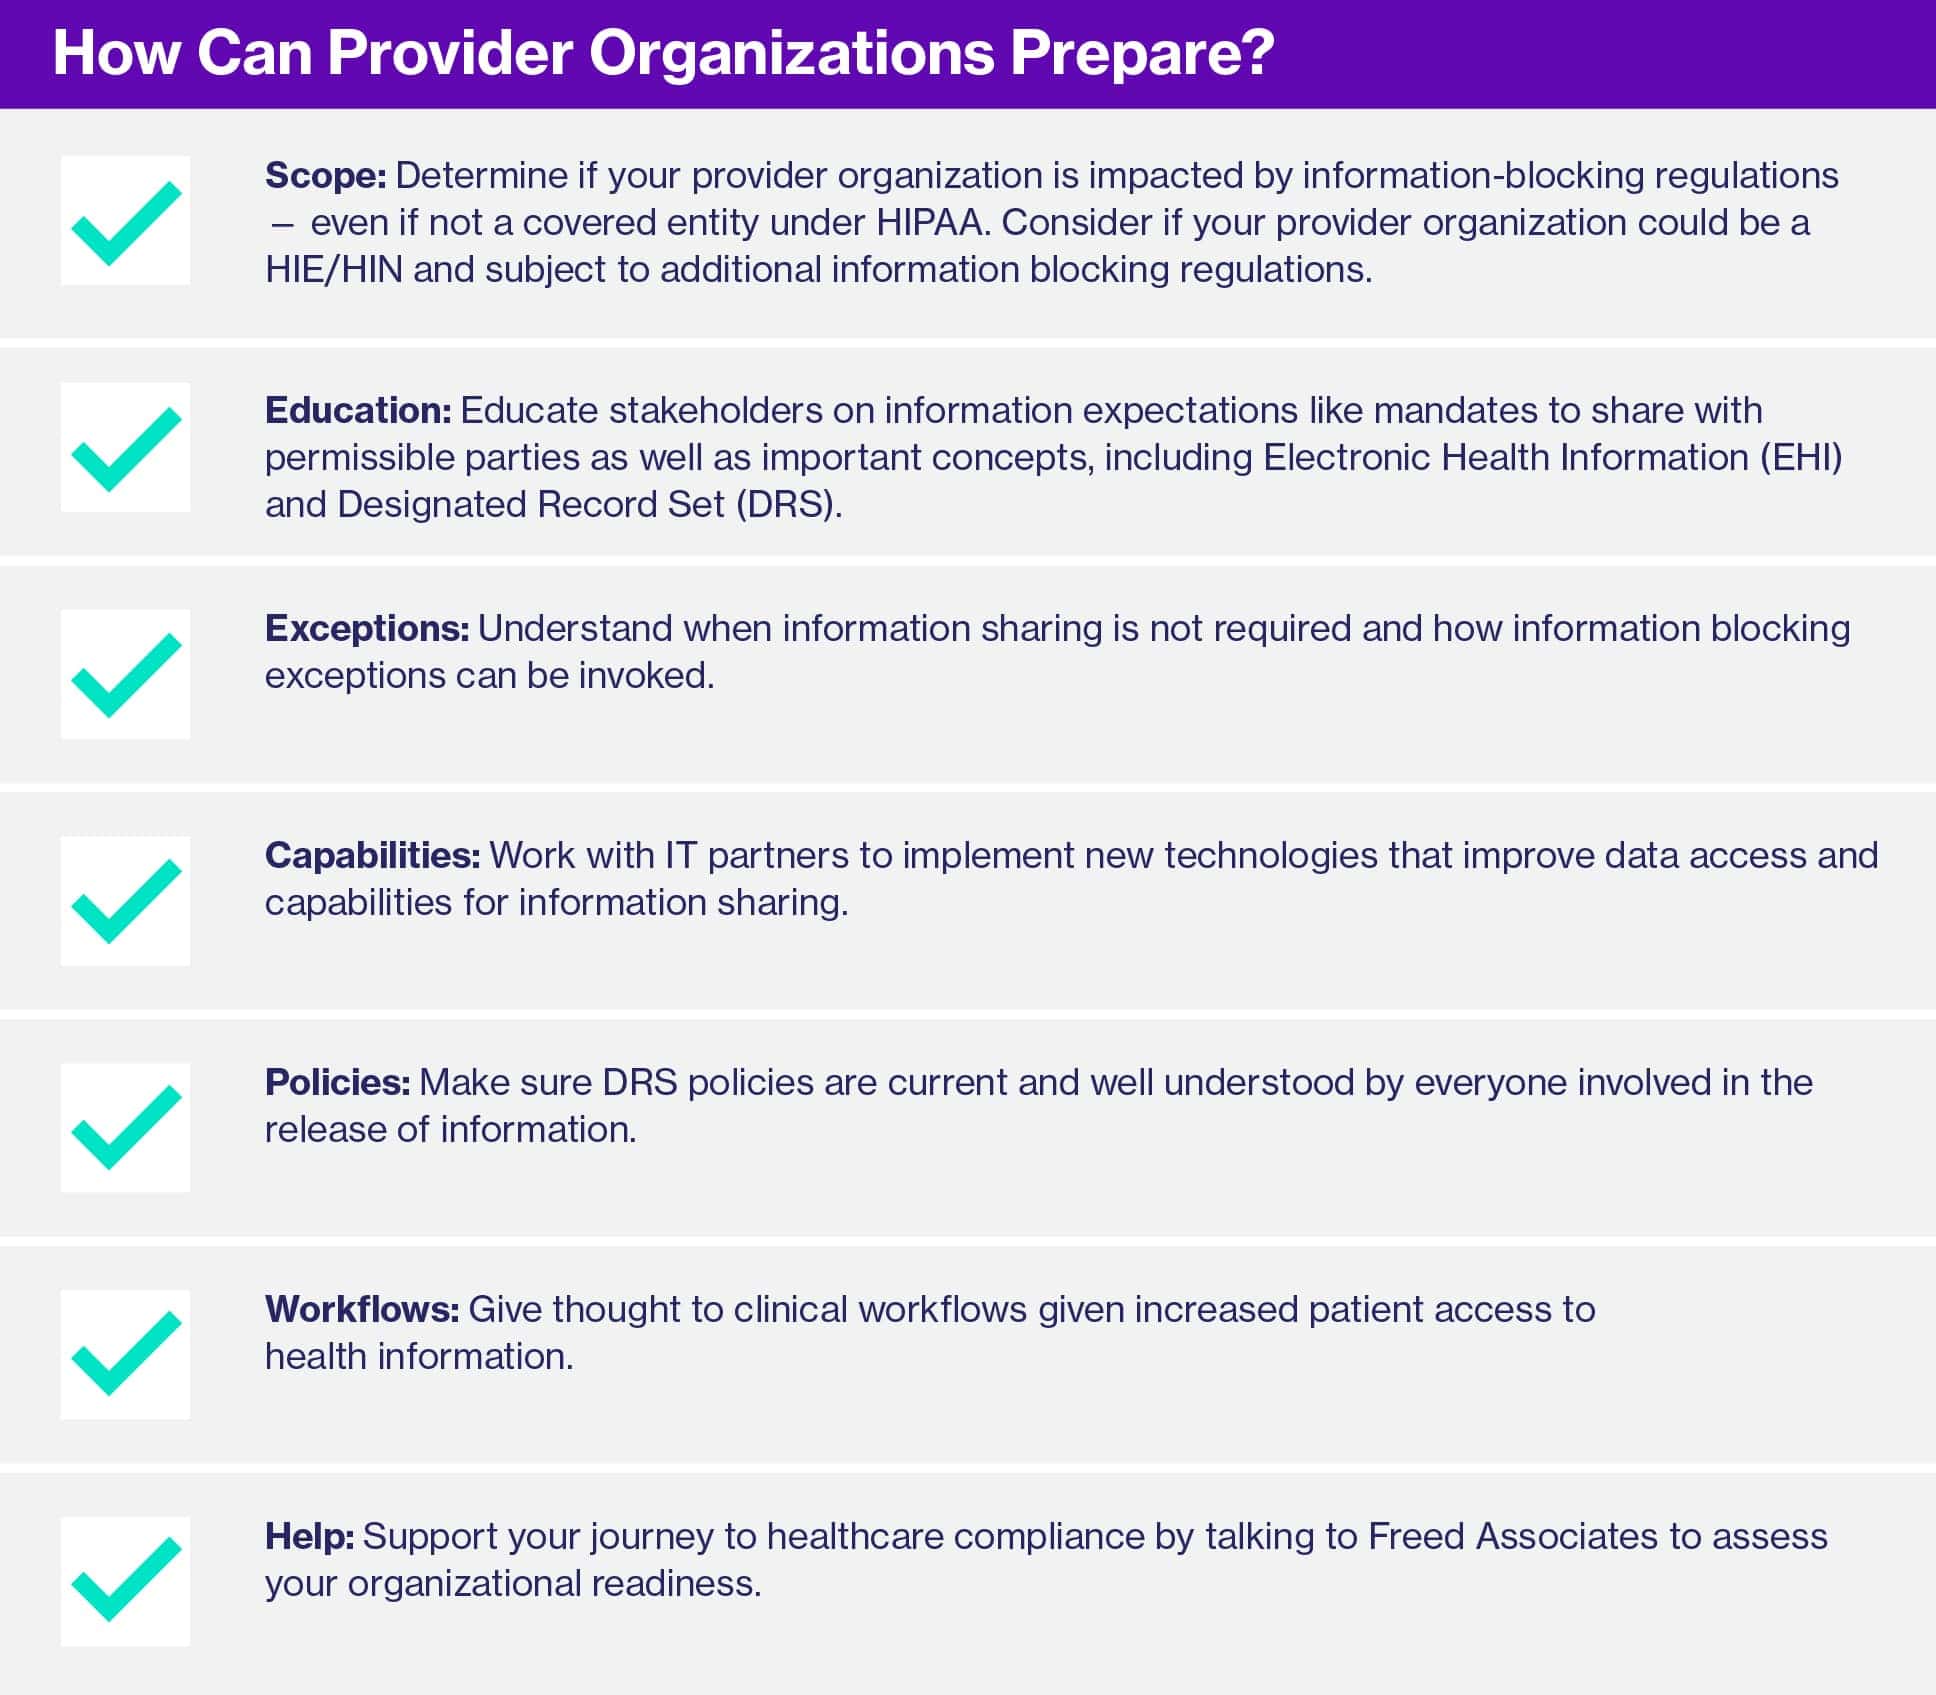 How Can Provider Organizations Prepare?